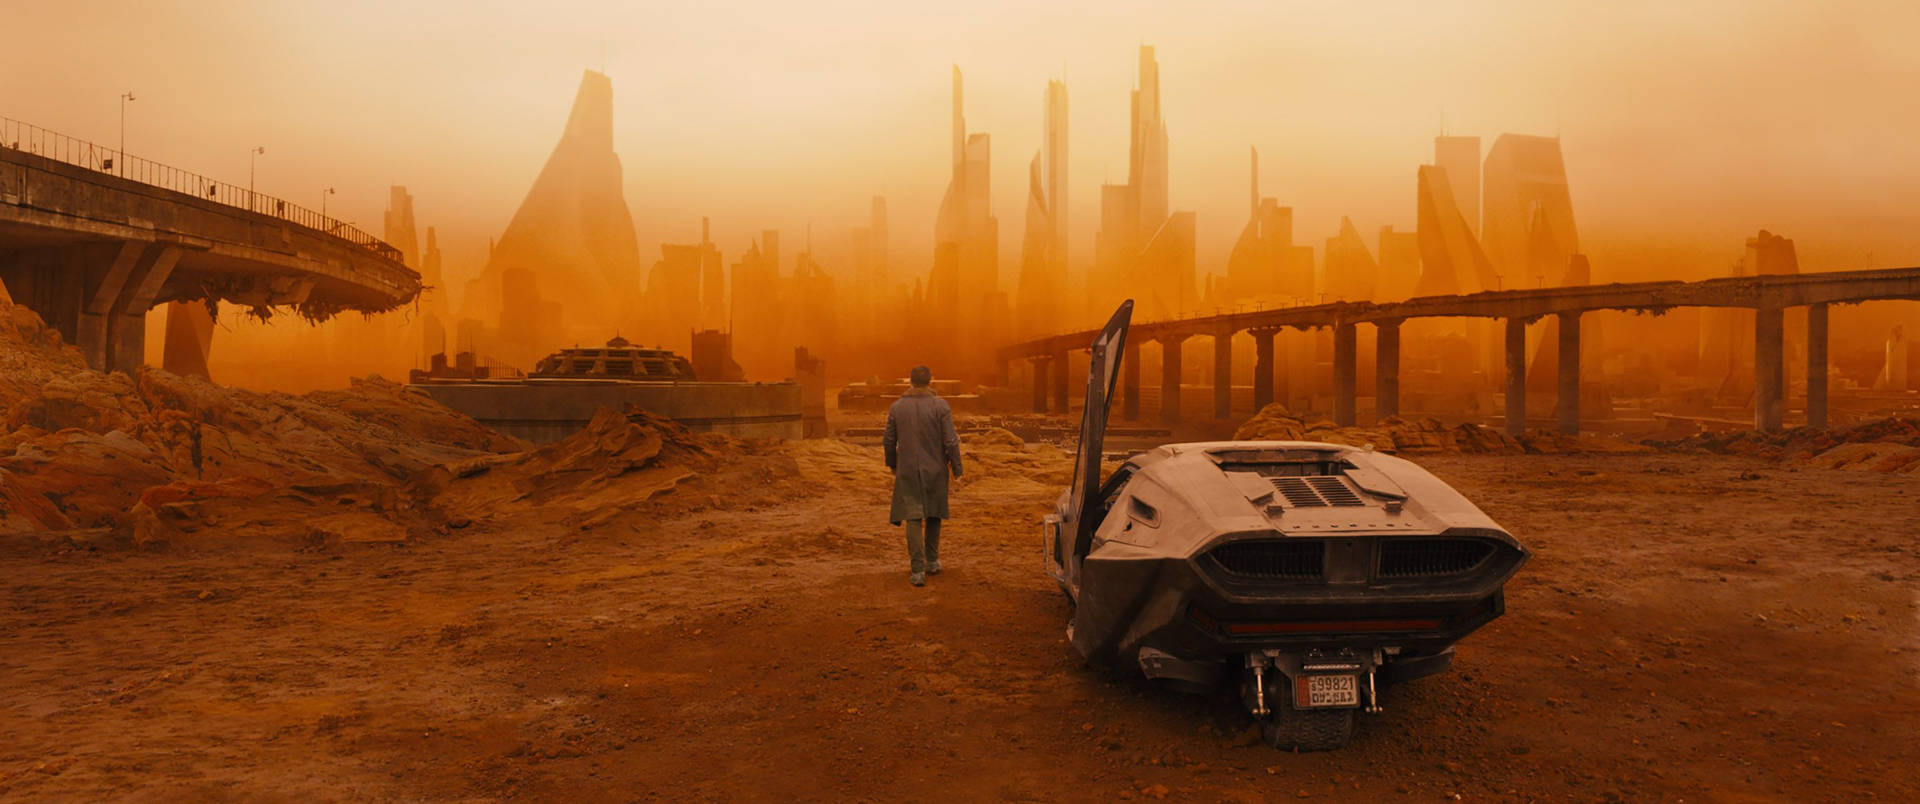 Officer K Roaming the City Ruins in Blade Runner 2049 Wallpaper